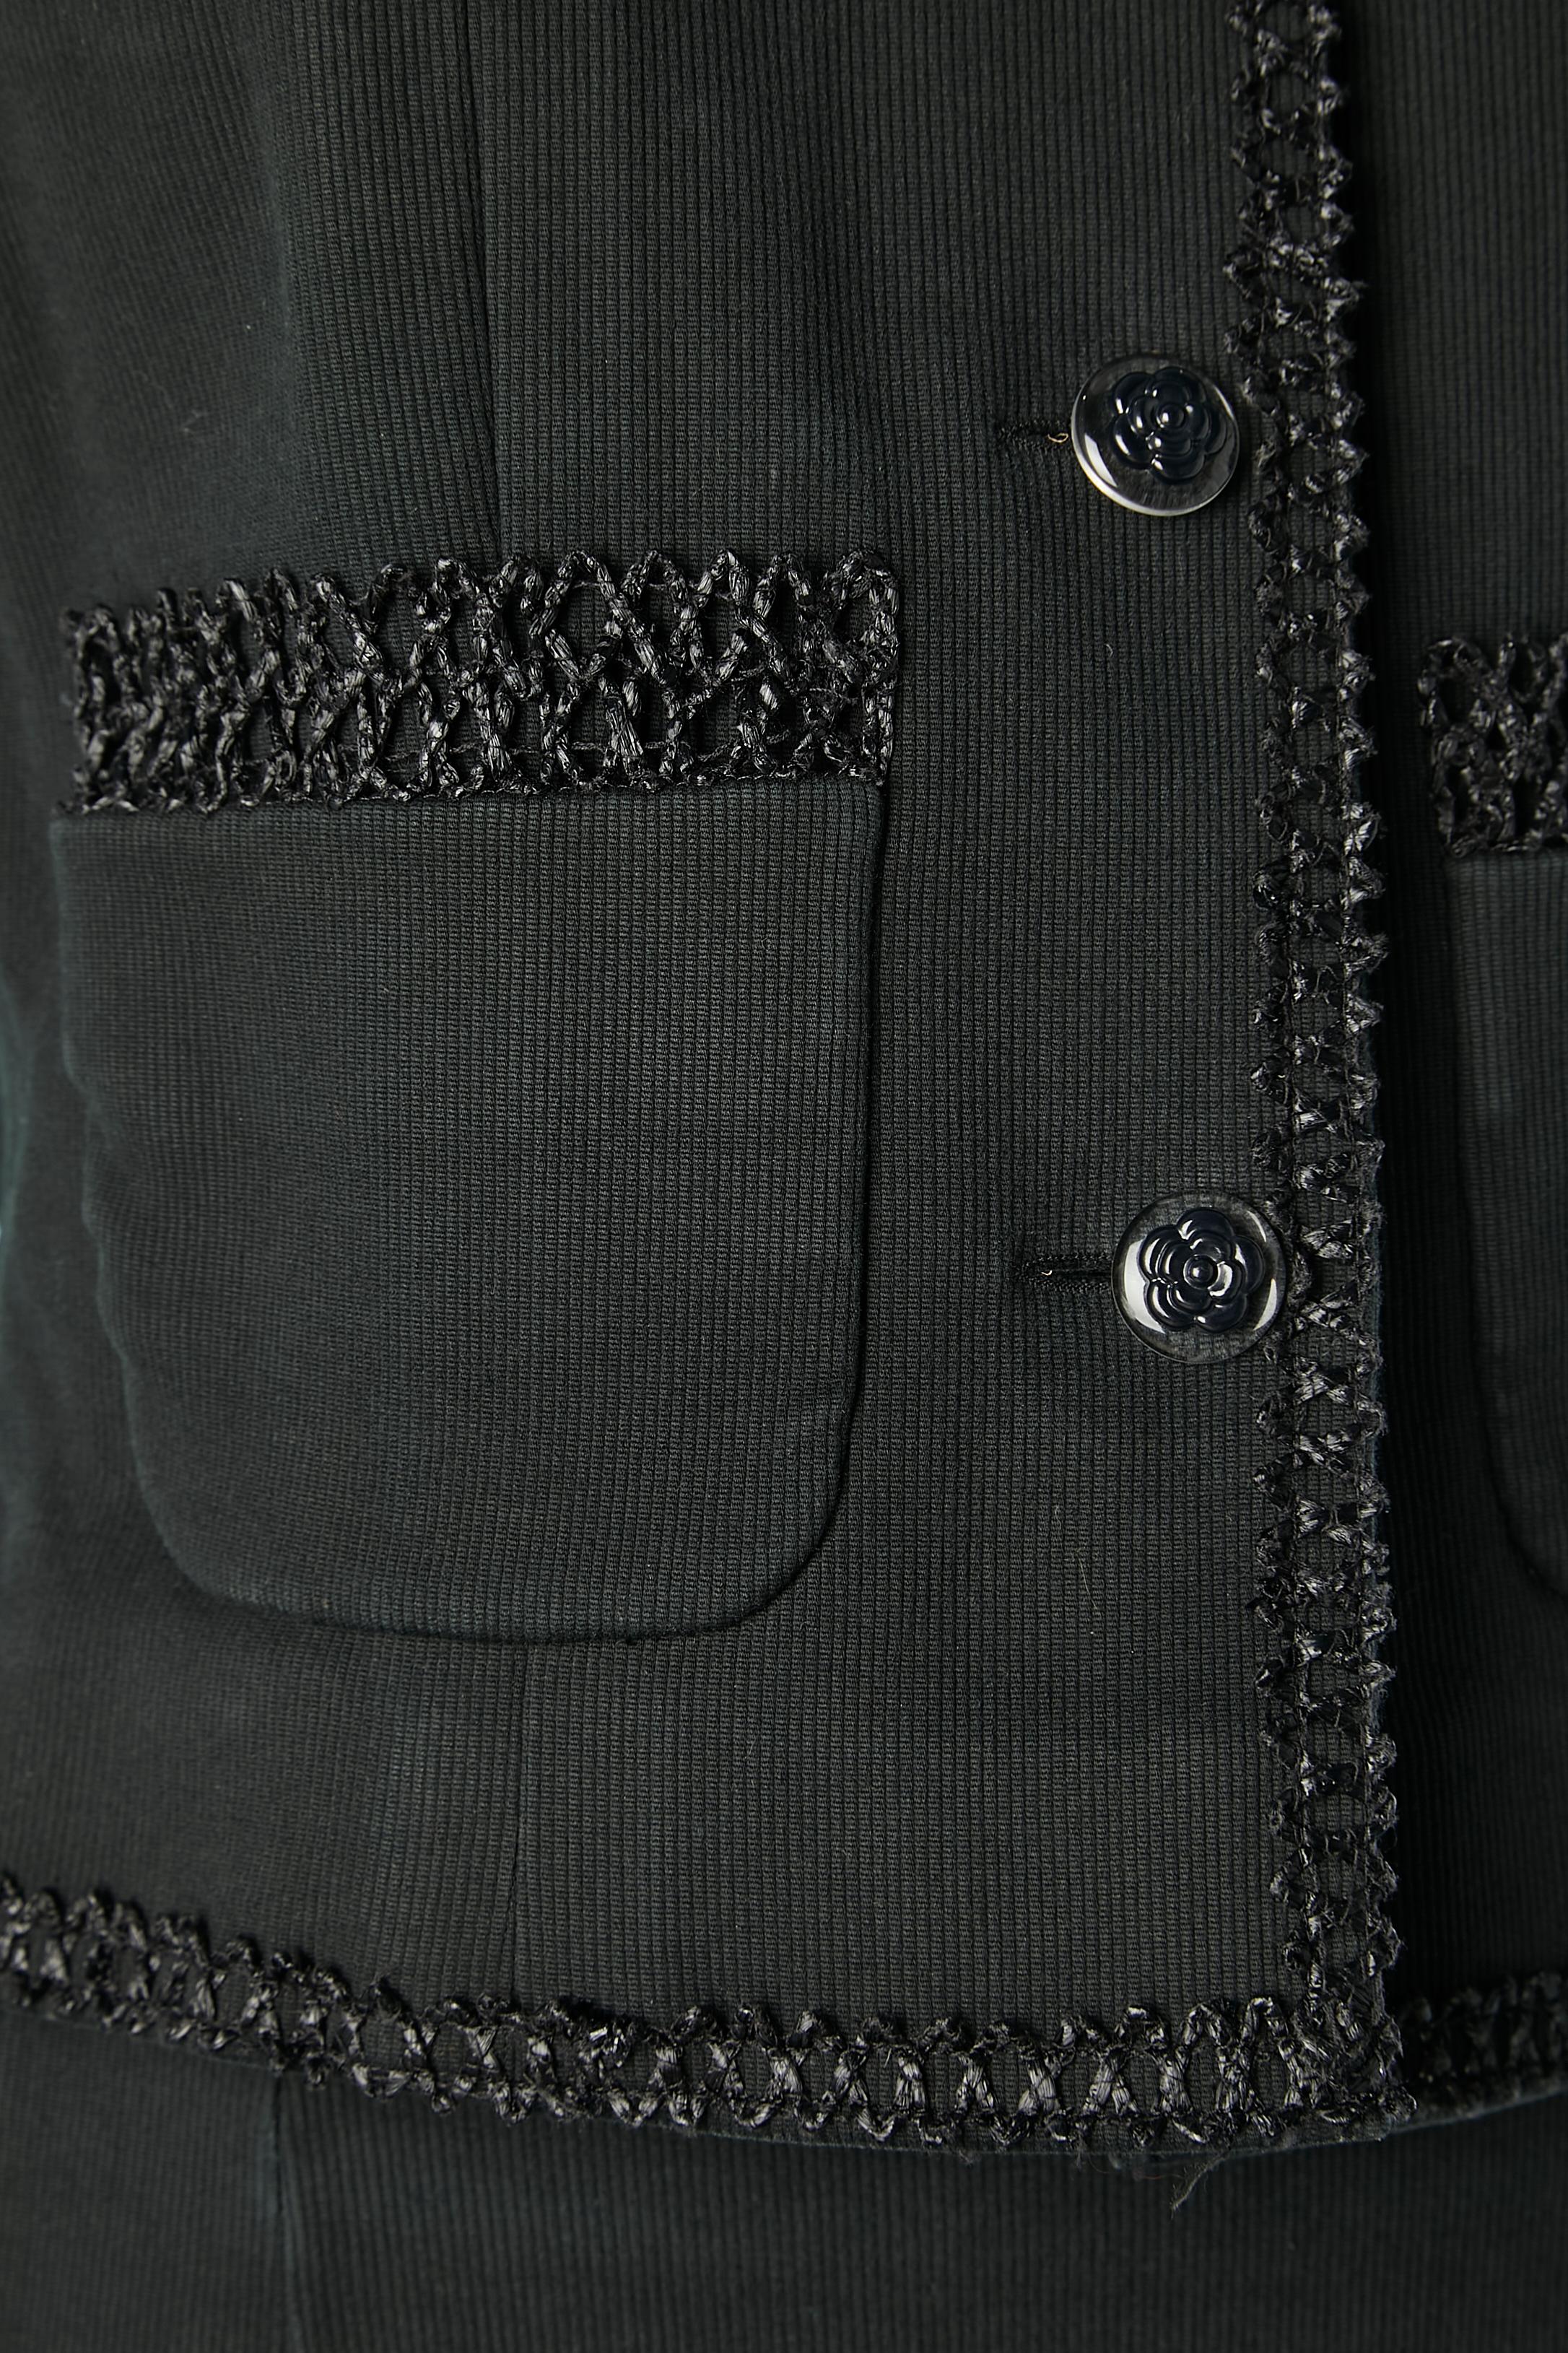 Black cotton skirt-suit with raffia edge and camelia buttons Chanel Boutique  In Excellent Condition For Sale In Saint-Ouen-Sur-Seine, FR